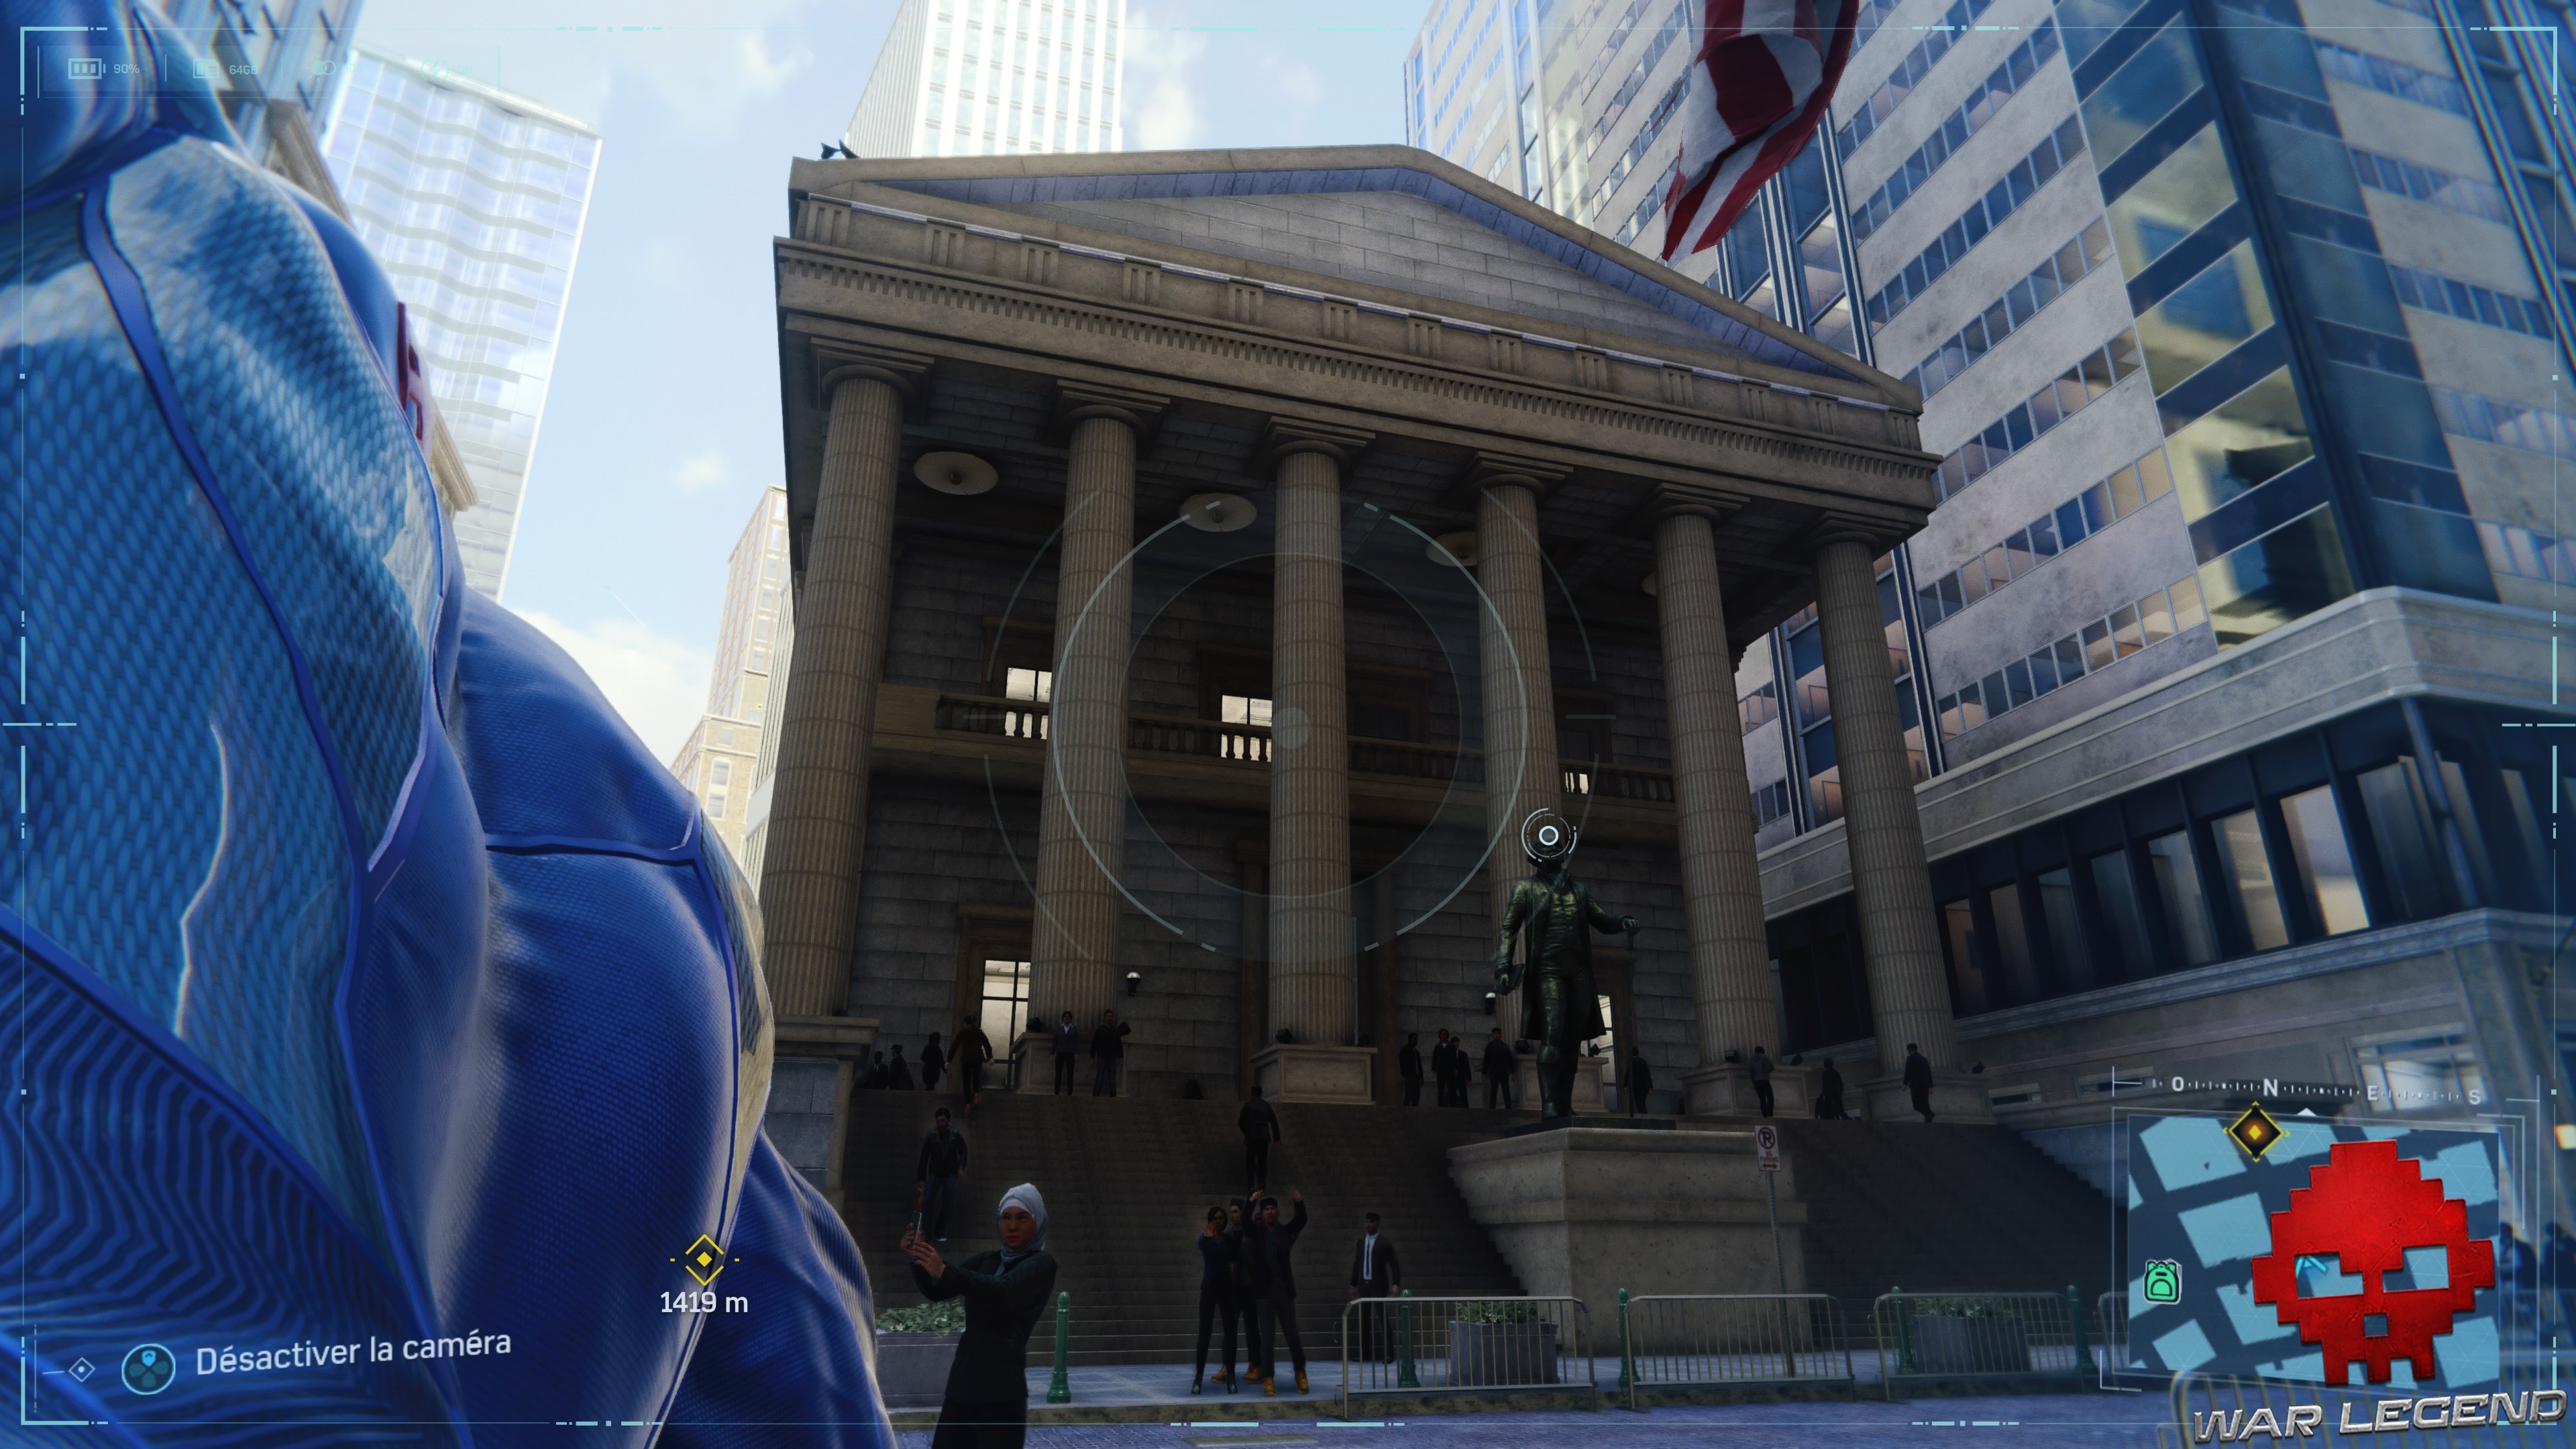 Spider-Man Monuments Quartier des affaires Wall Street photo